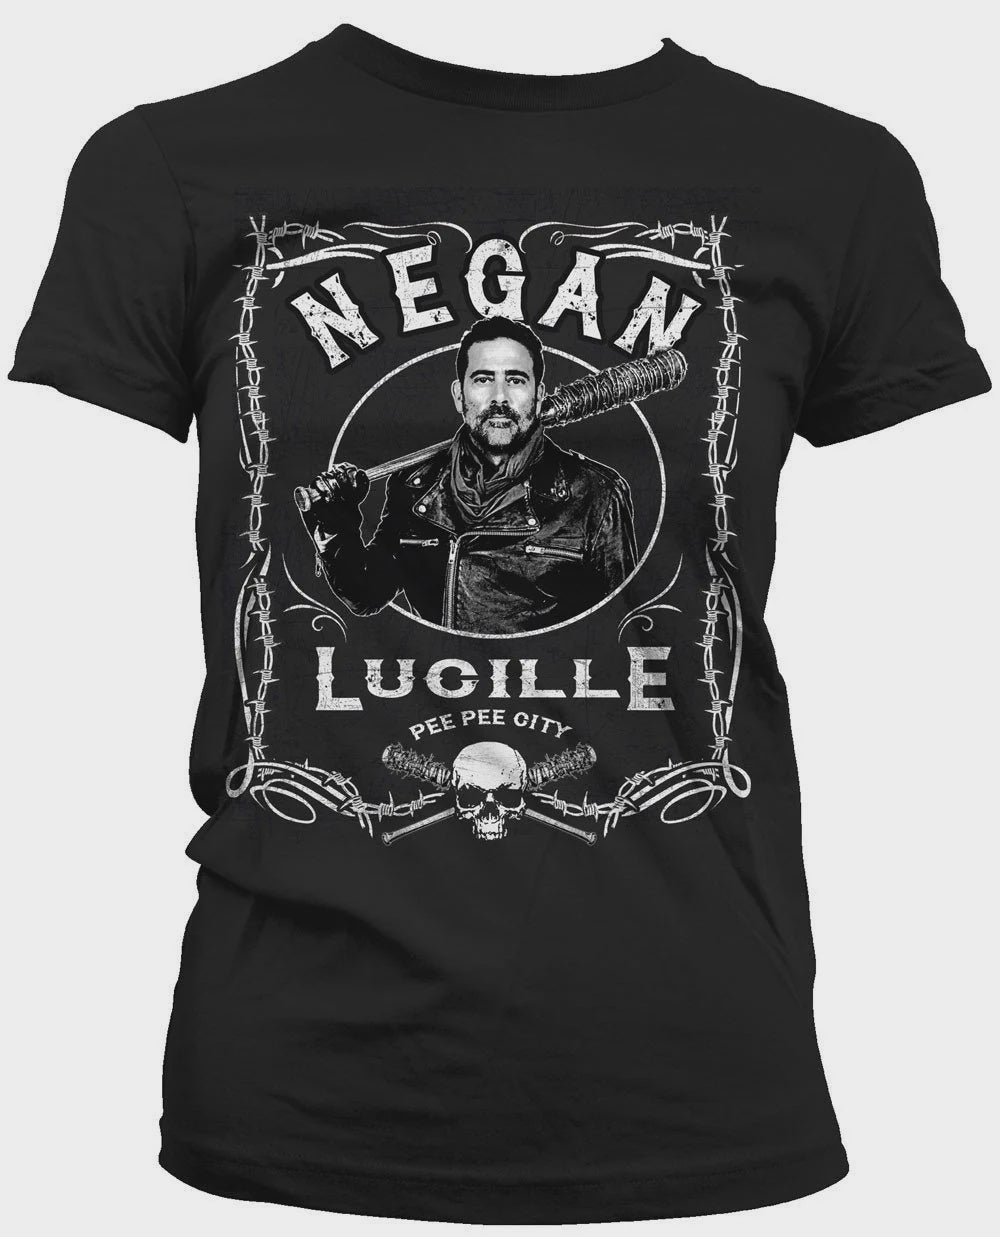 WALKING DEAD - Negan Label T-Shirt